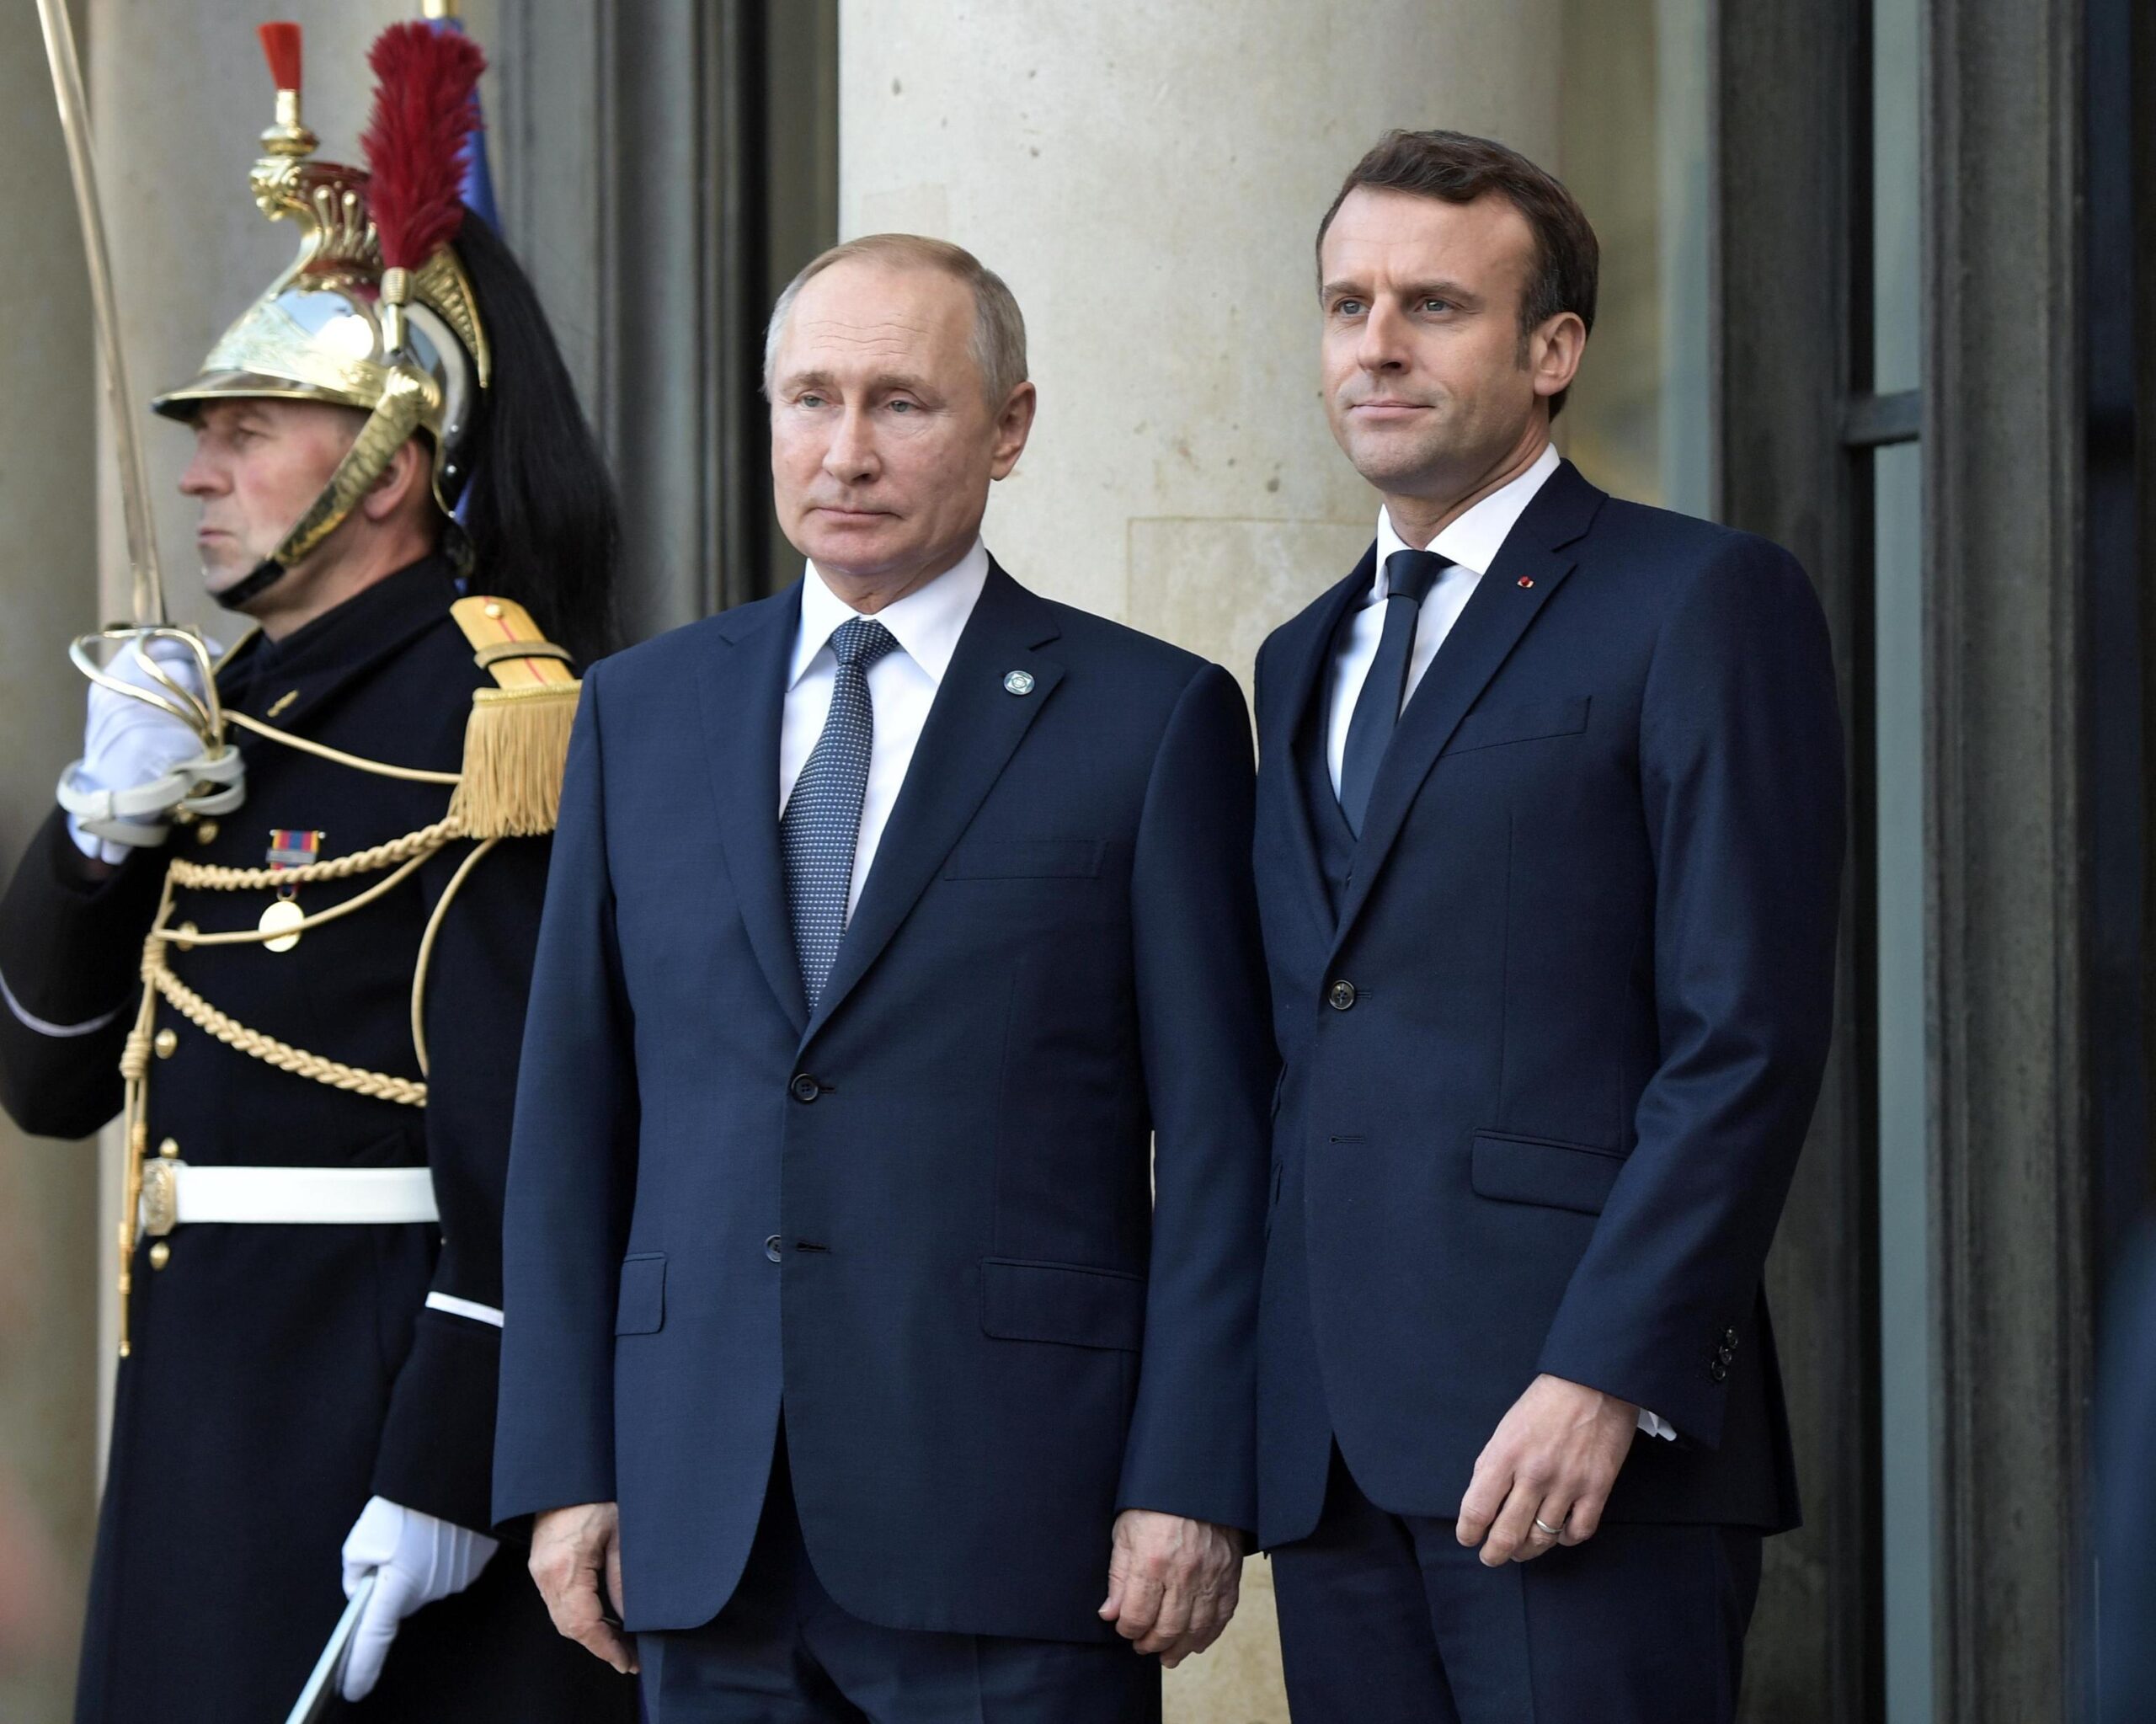 French President Emmanuel Macron (R) greets Russian President Vladimir Putin as he arrives to attend a summit on Ukraine at the Elysee Palace in Paris, France, 09 December 2019. ANSA/ALEXEI NIKOLSKY/SPUTNIK/KREMLIN POOL / POOL MANDATORY CREDIT/SPUTNIK